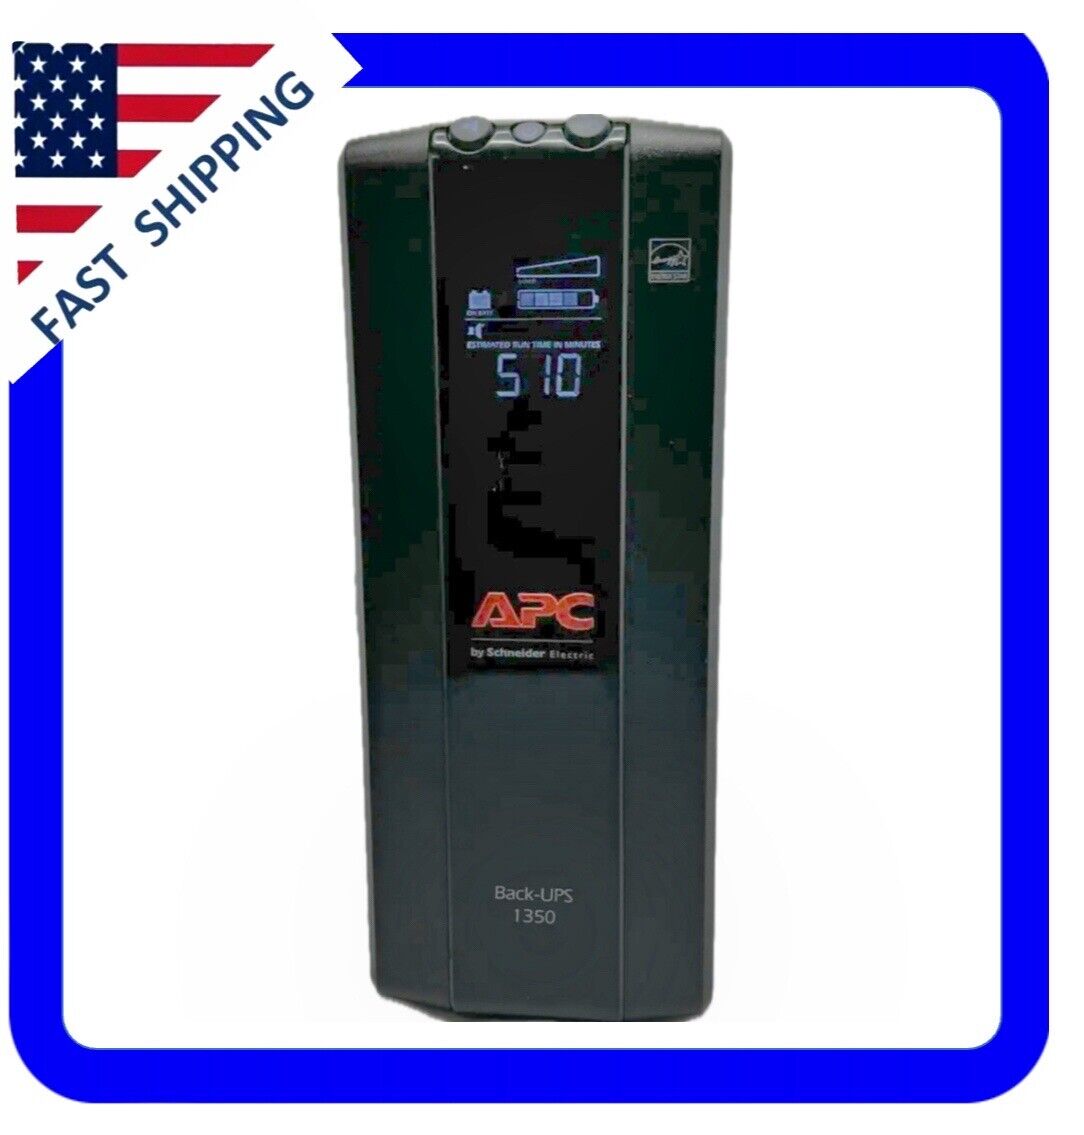 APC BX1500M BX1350M Back-UPS 1500 Uninterruptible Power Supply Surge Protector